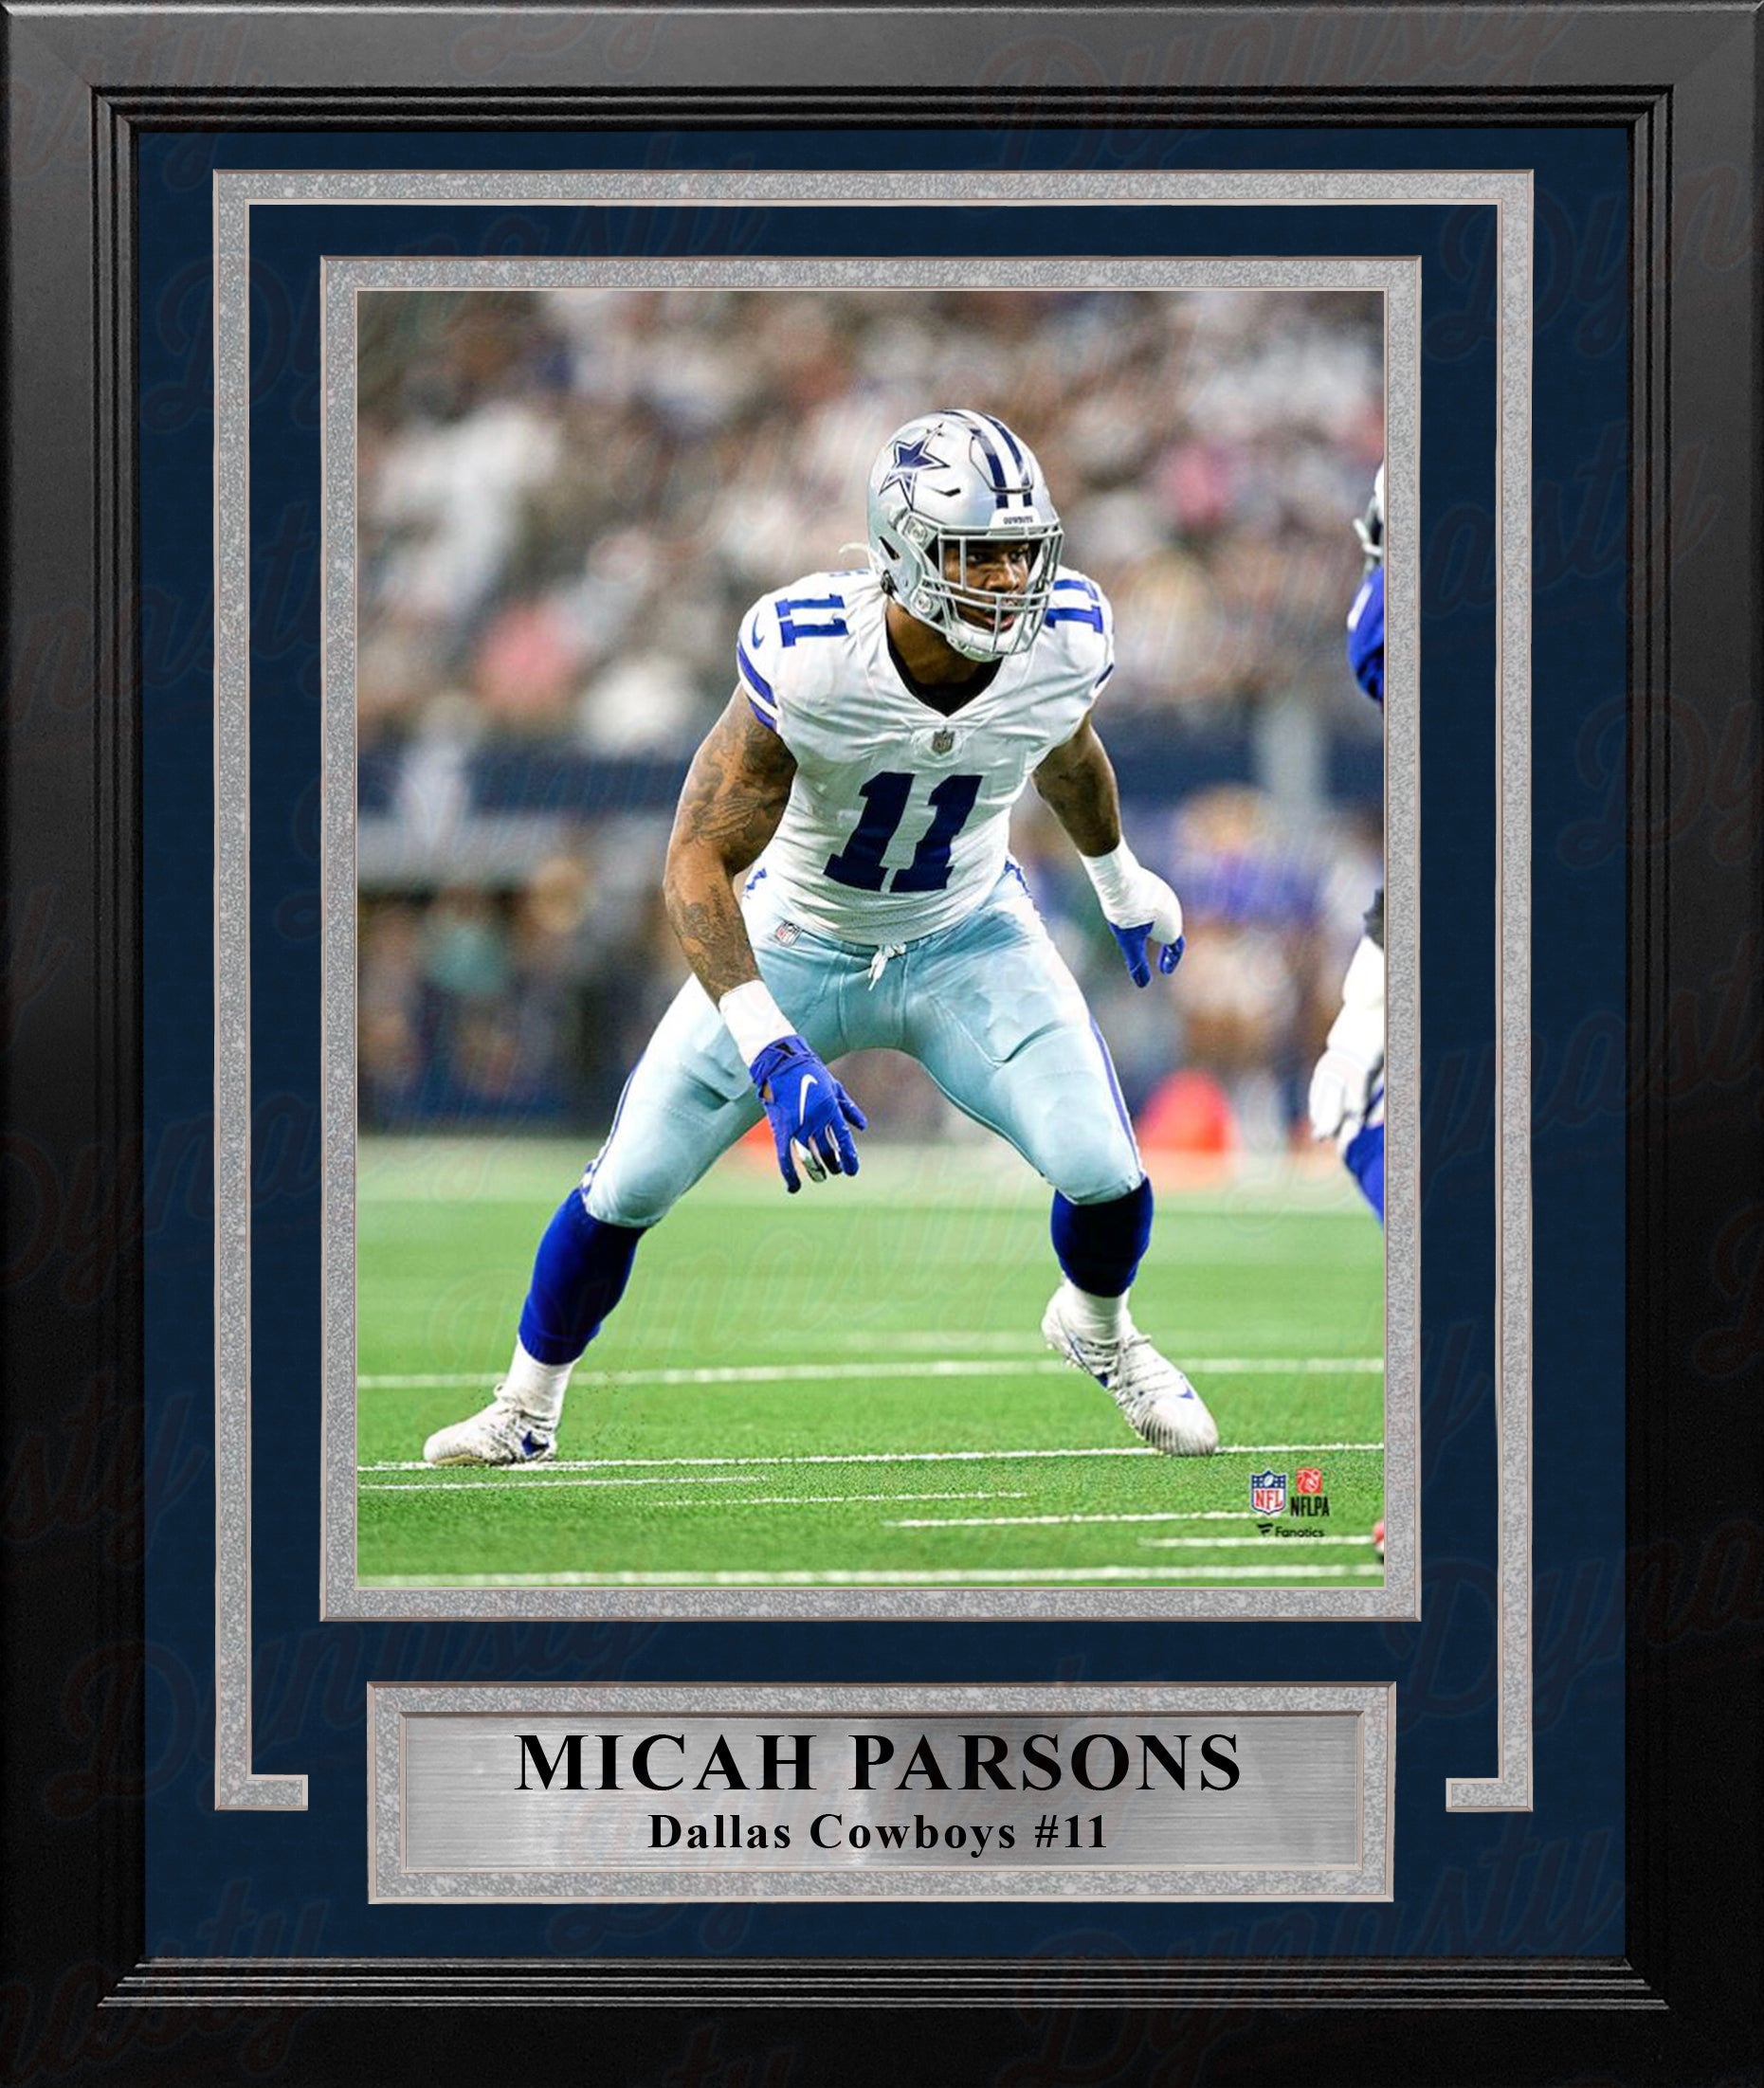 Micah Parsons in Action Dallas Cowboys 8" x 10" Framed Football Photo - Dynasty Sports & Framing 